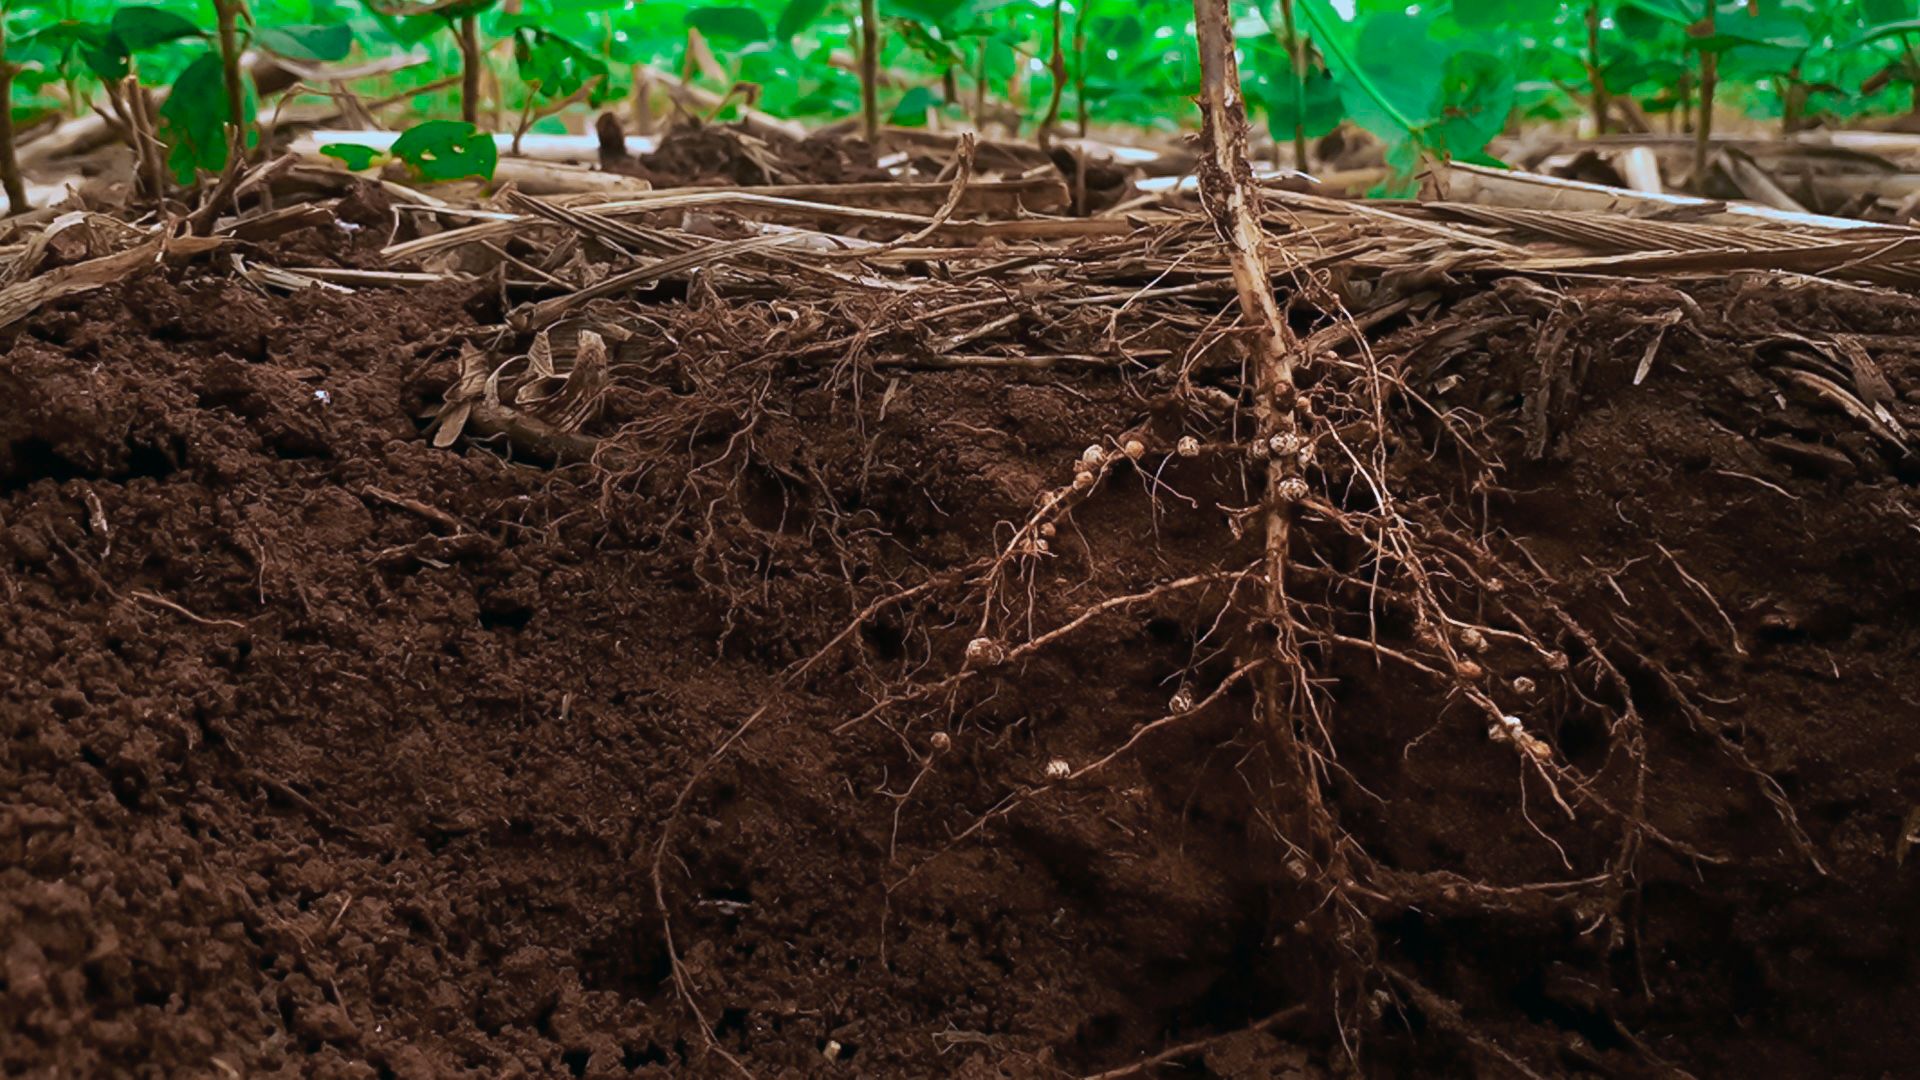 Punhado de terra com raiz impregnada de nematoide